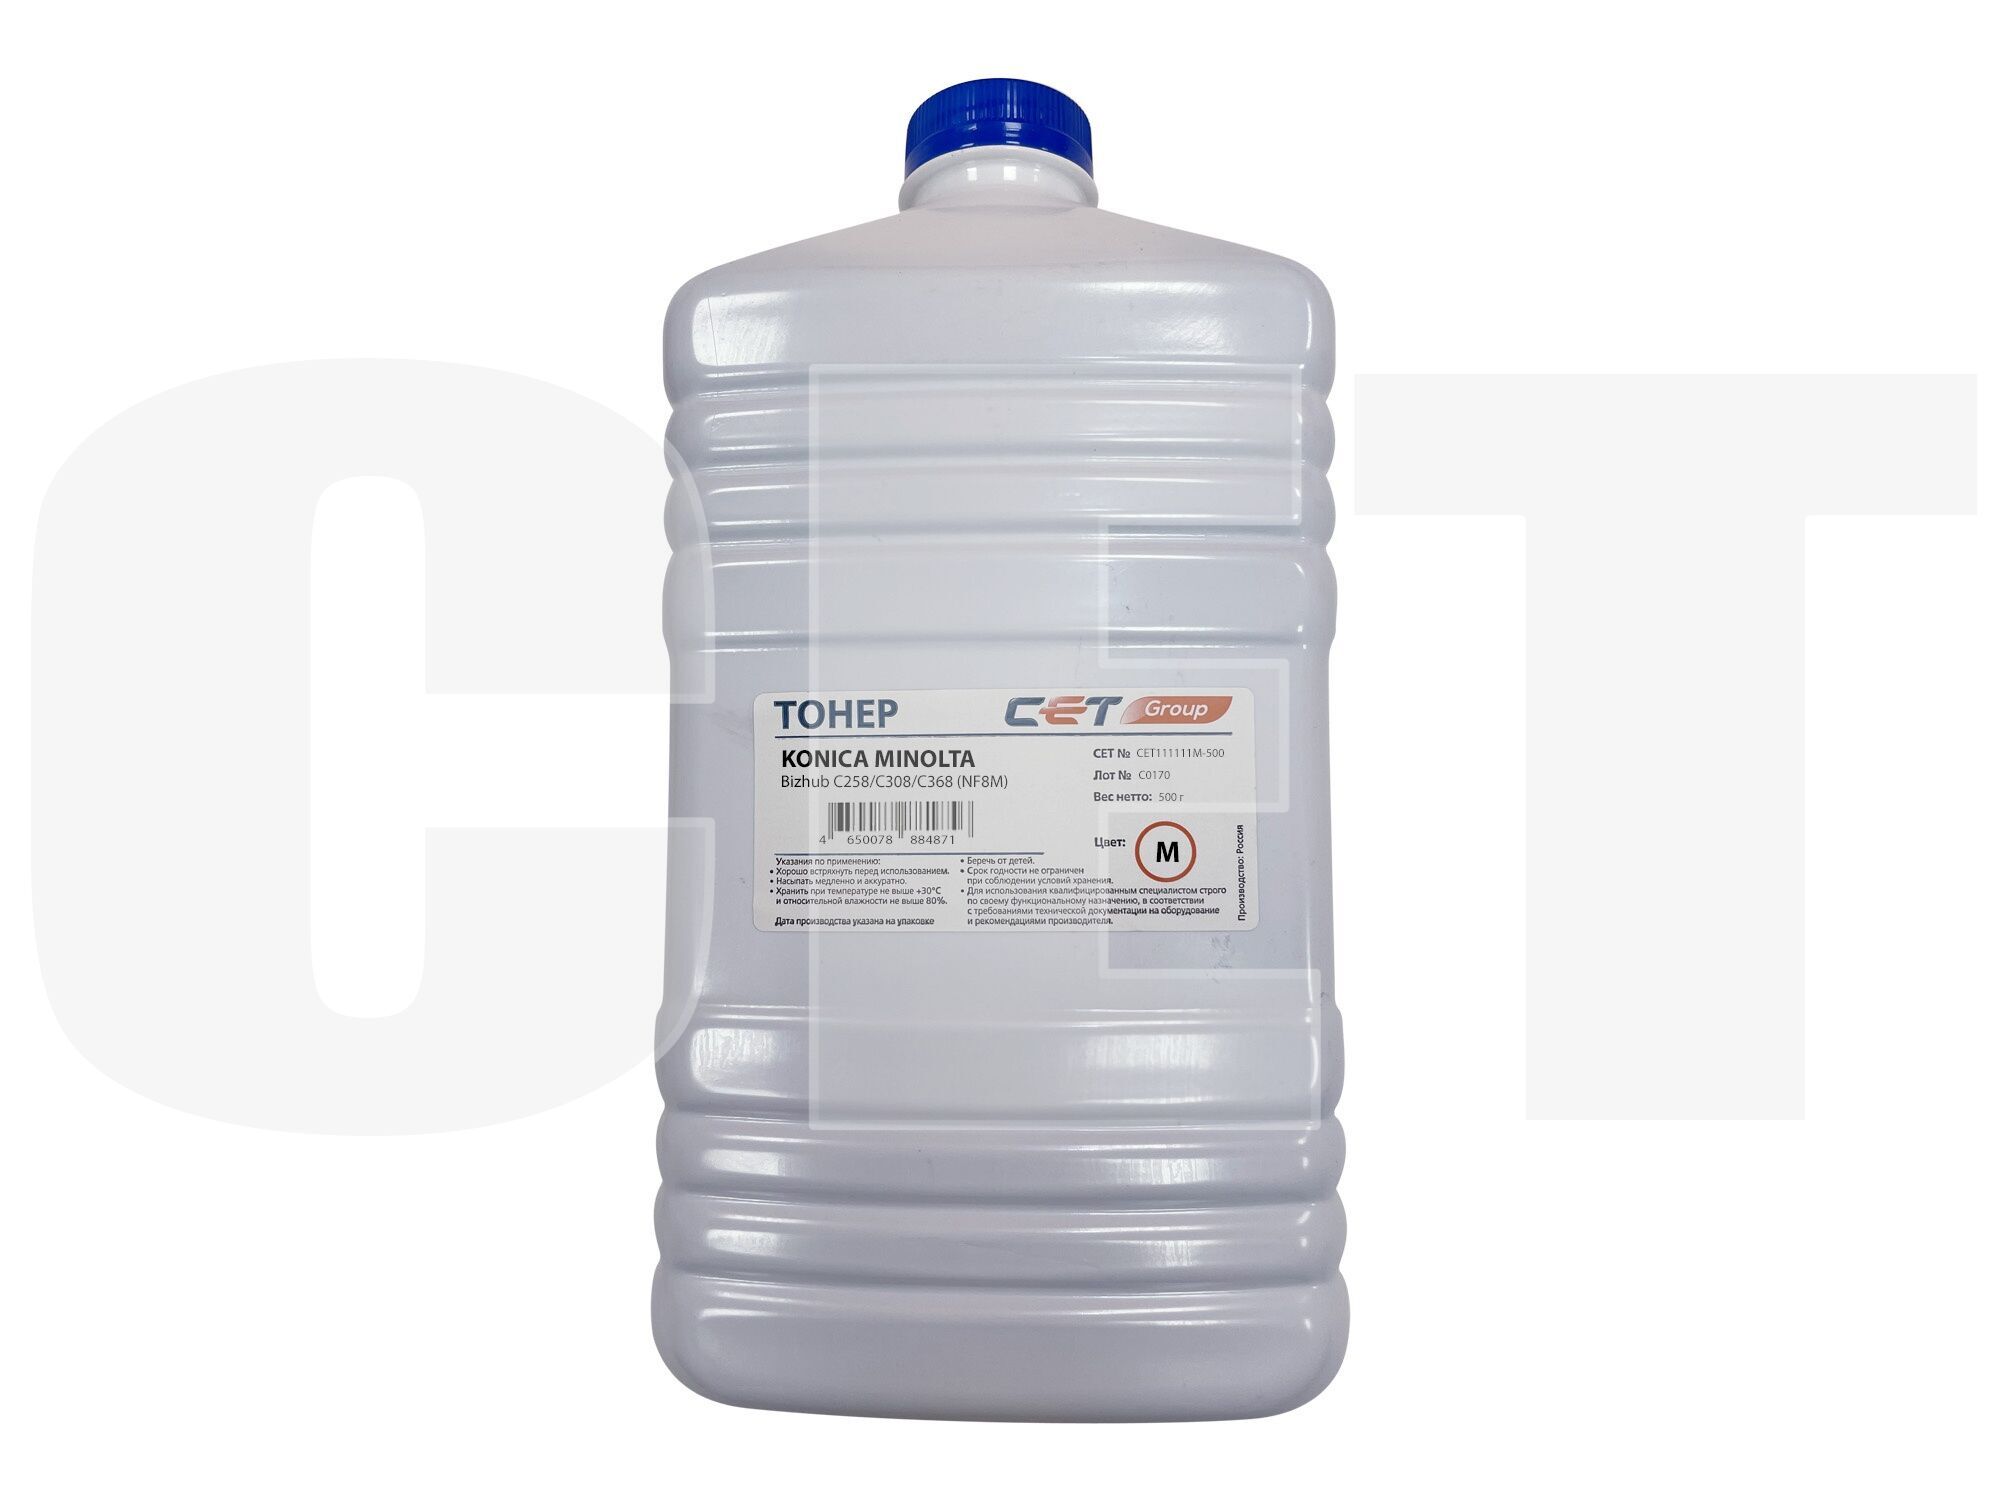 Тонер CET NF8M TN-324, бутыль 500 г, пурпурный, совместимый для Konica Minolta Bizhub C258/C308/C368 (CET111111M-500)